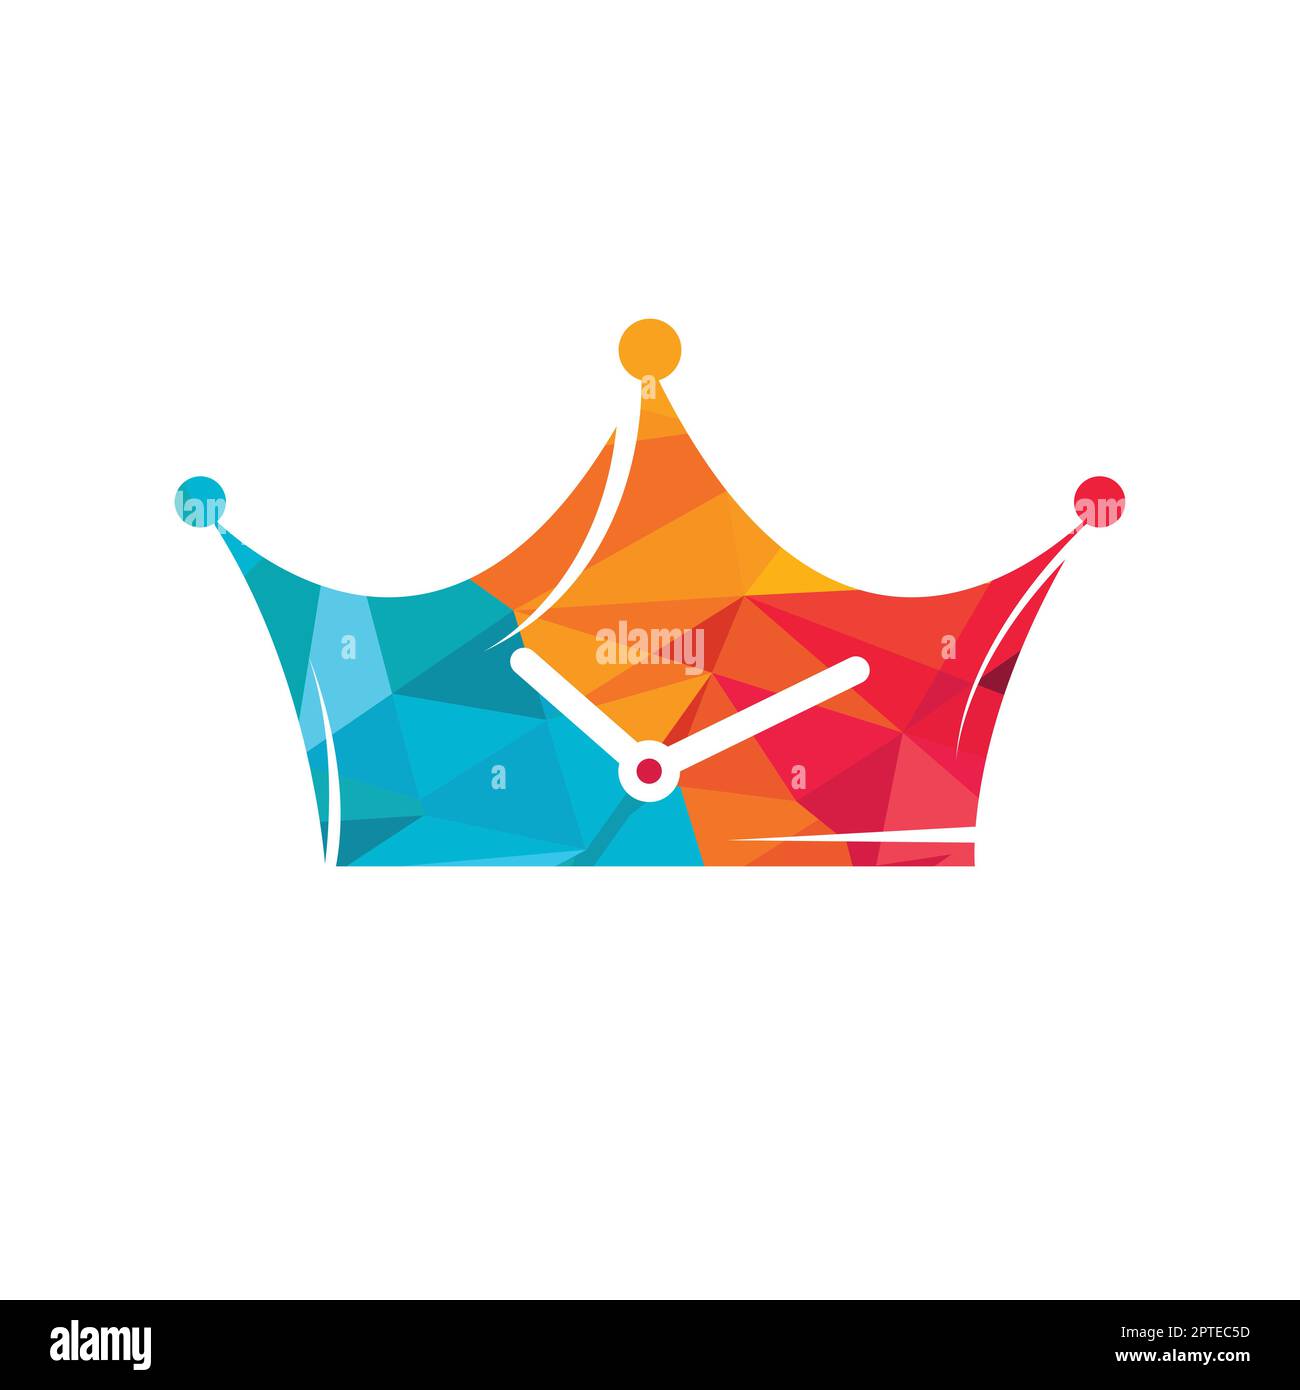 King time vector logo design template. Crown with clock icon vector logo design. Stock Vector